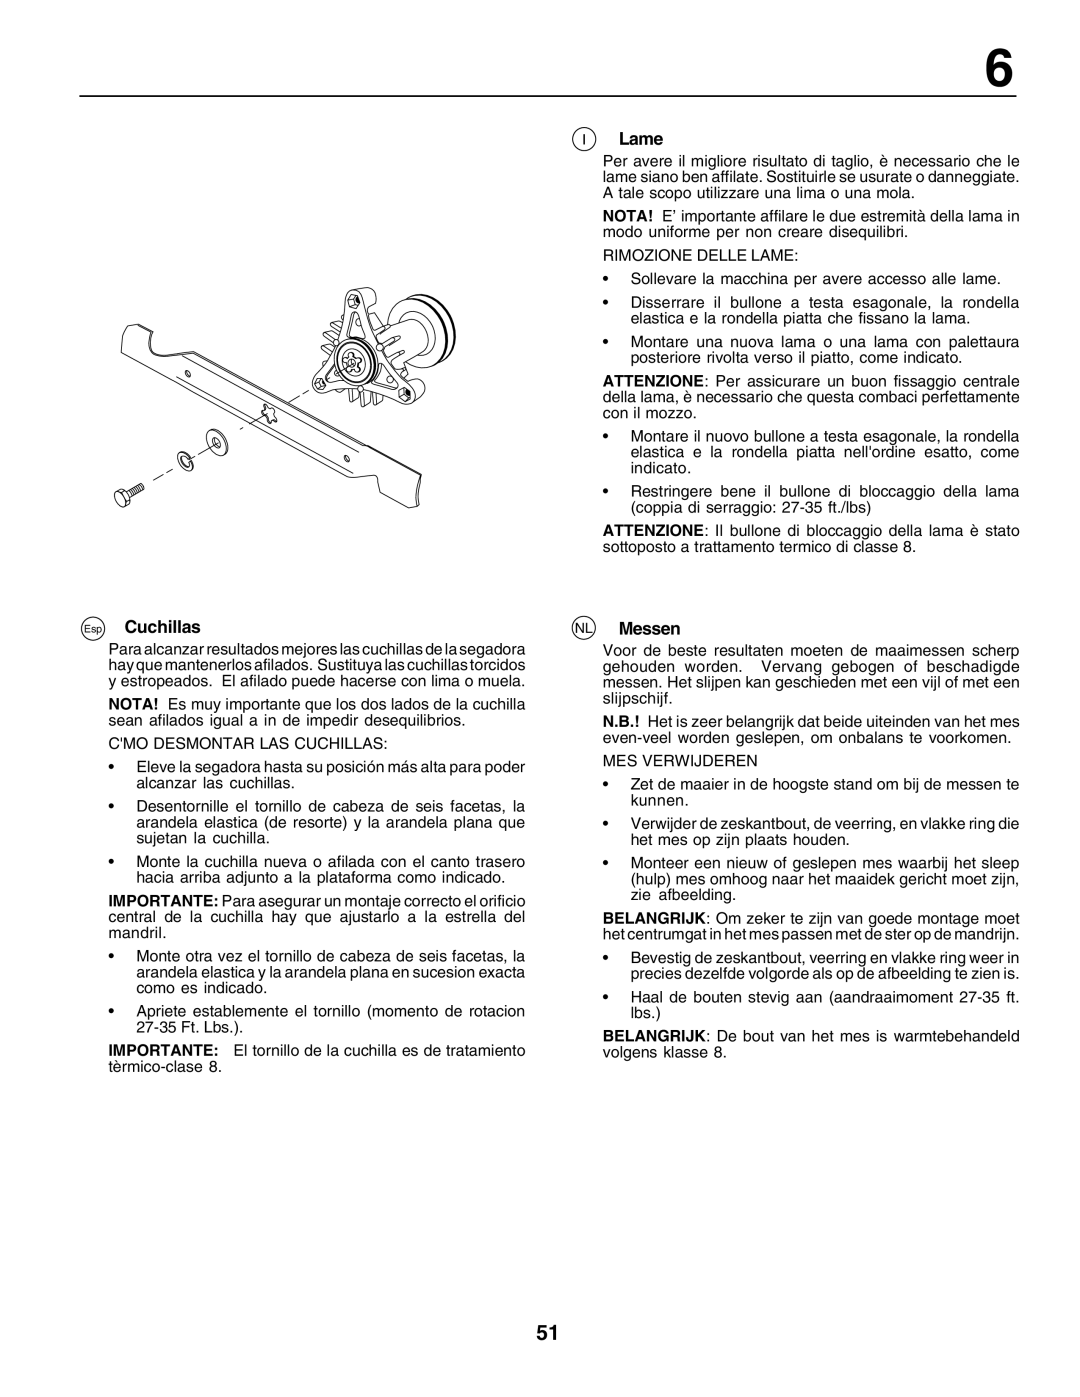 Husqvarna LT125 instruction manual Esp Cuchillas, Lame, NL Messen 